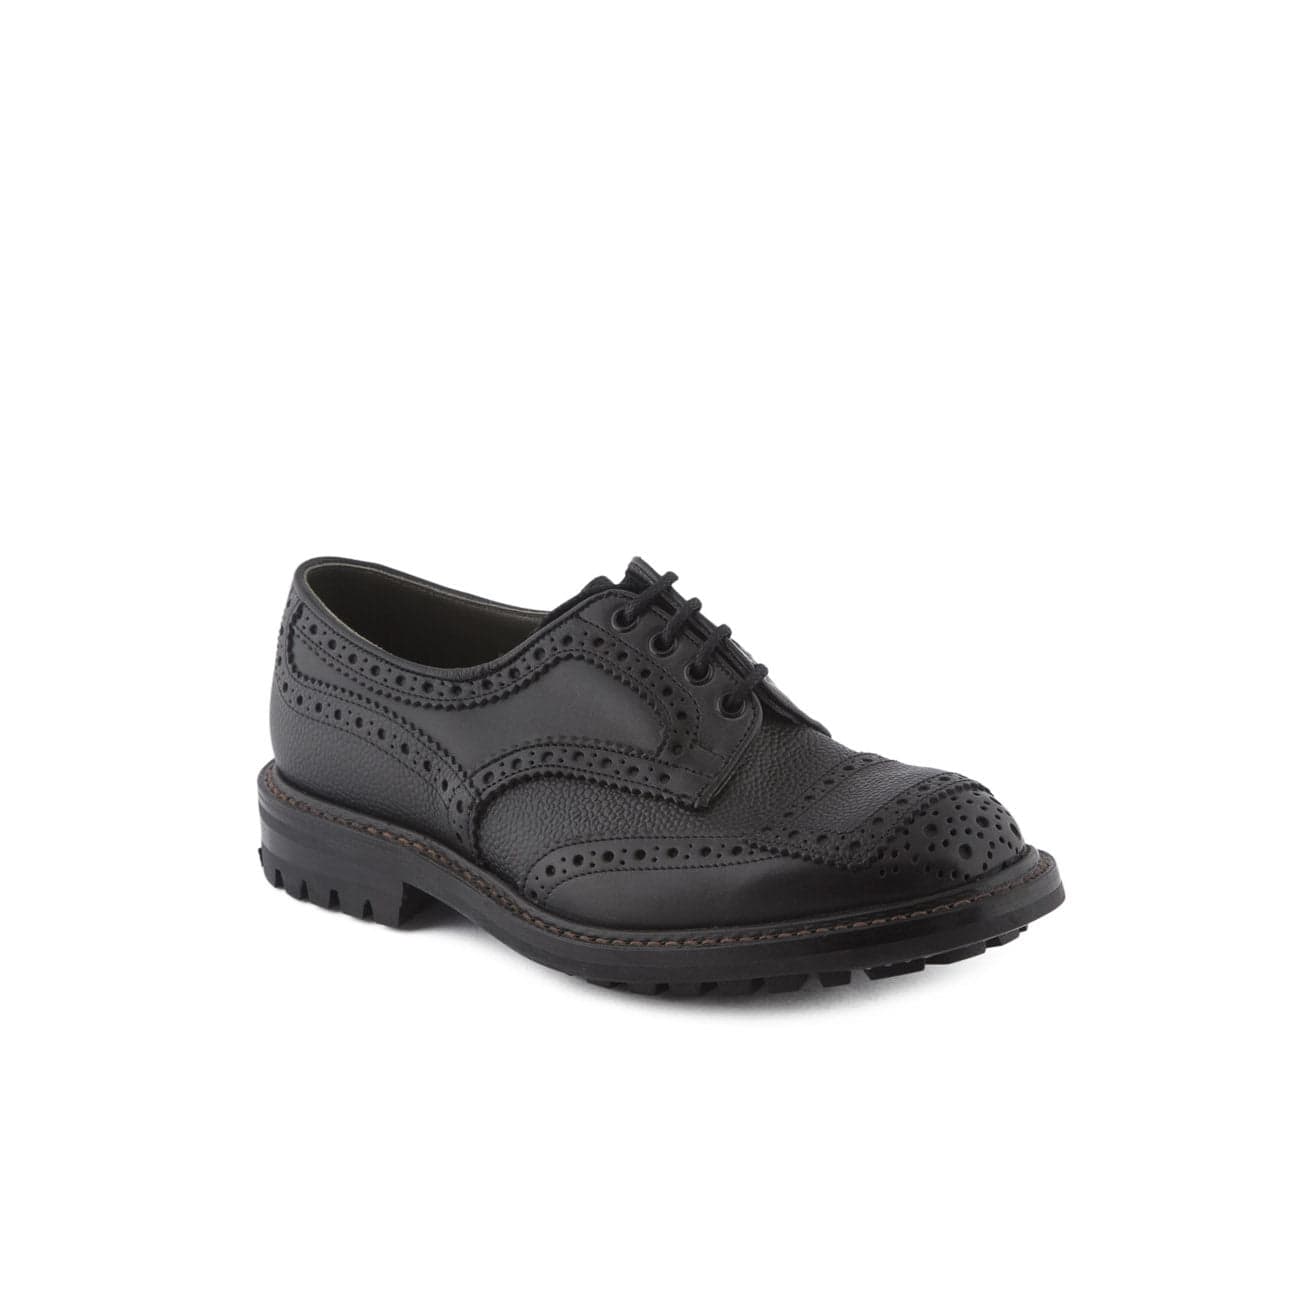 Francis 7615 Black Calf Derby Shoe